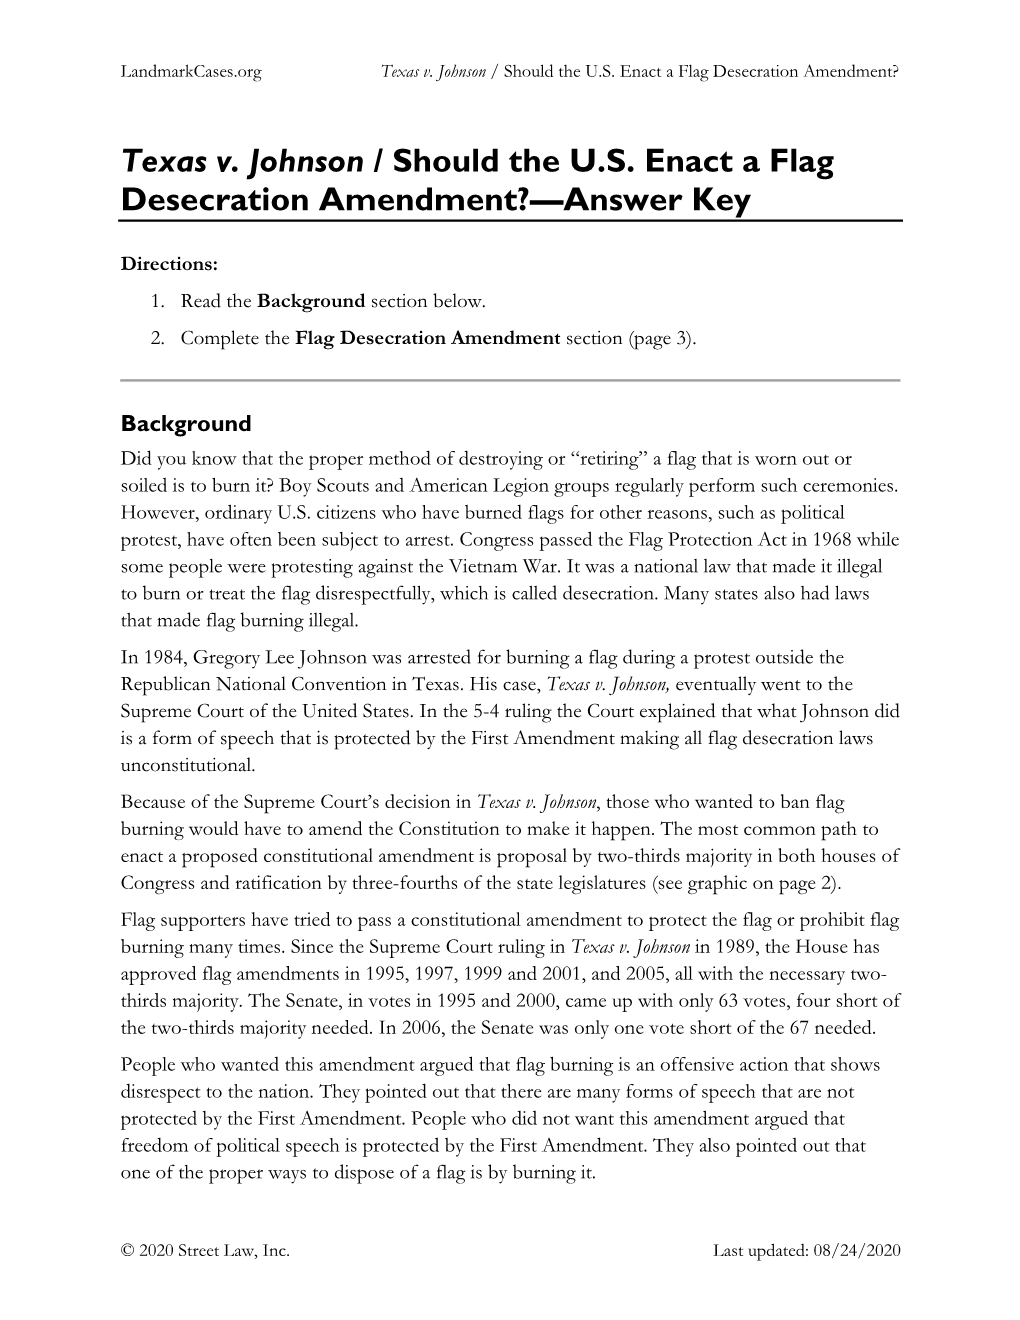 Texas V. Johnson / Should the U.S. Enact a Flag Desecration Amendment?